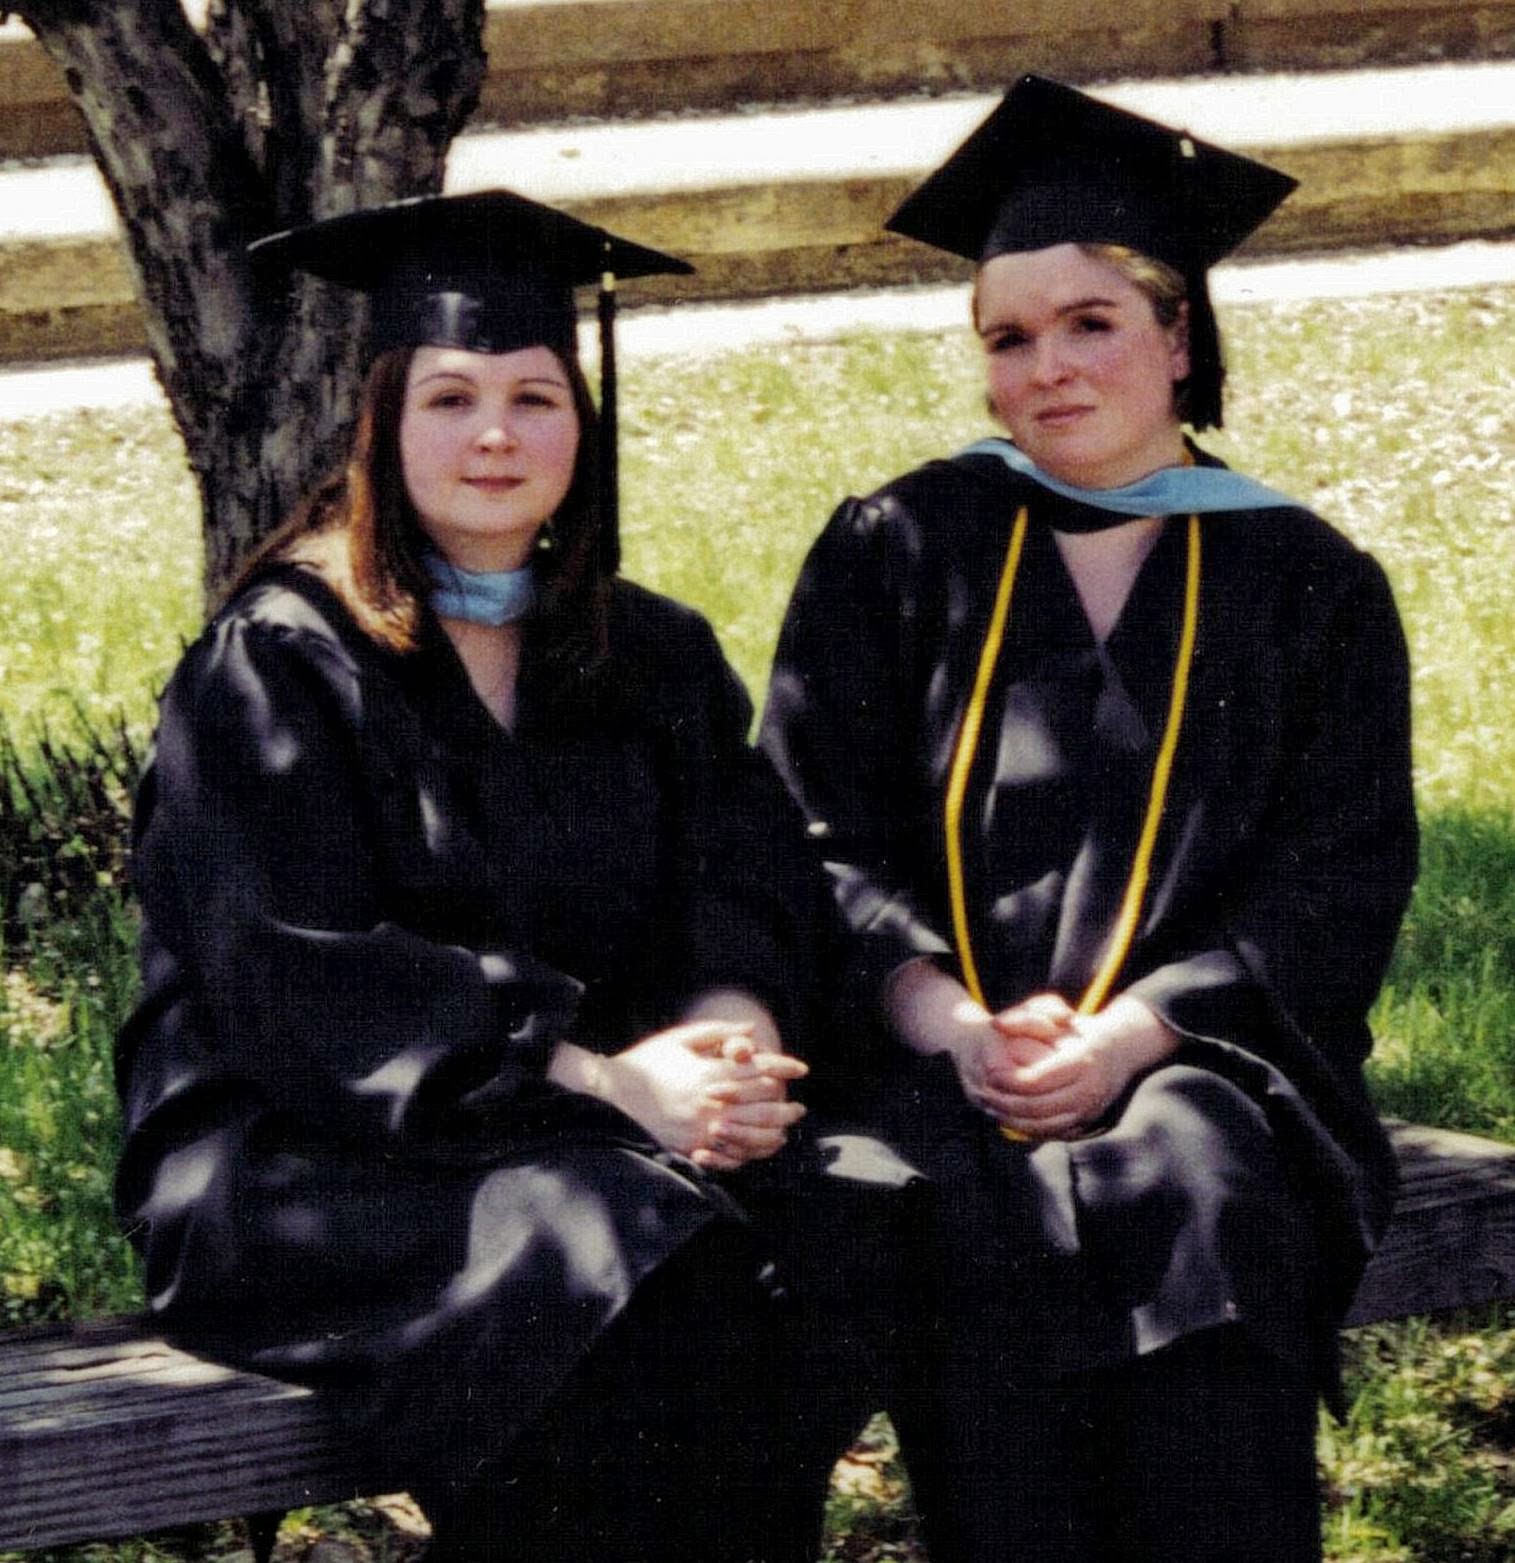 Graduates of SUNY